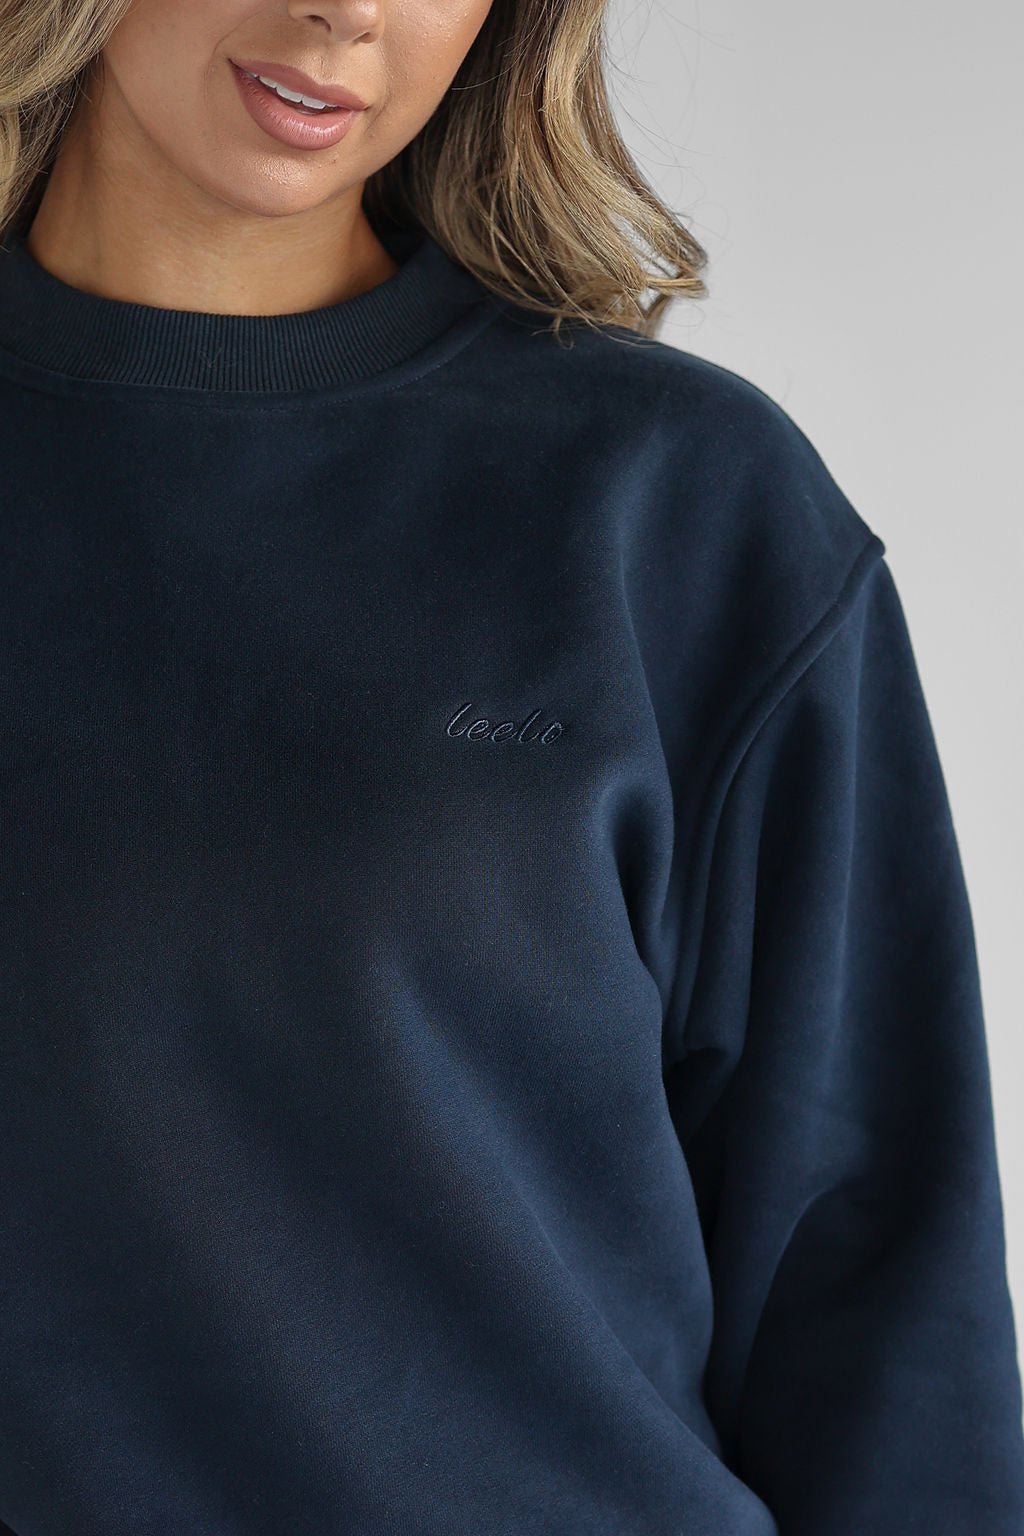 Signature Sweater - Navy - LEELO ACTIVE